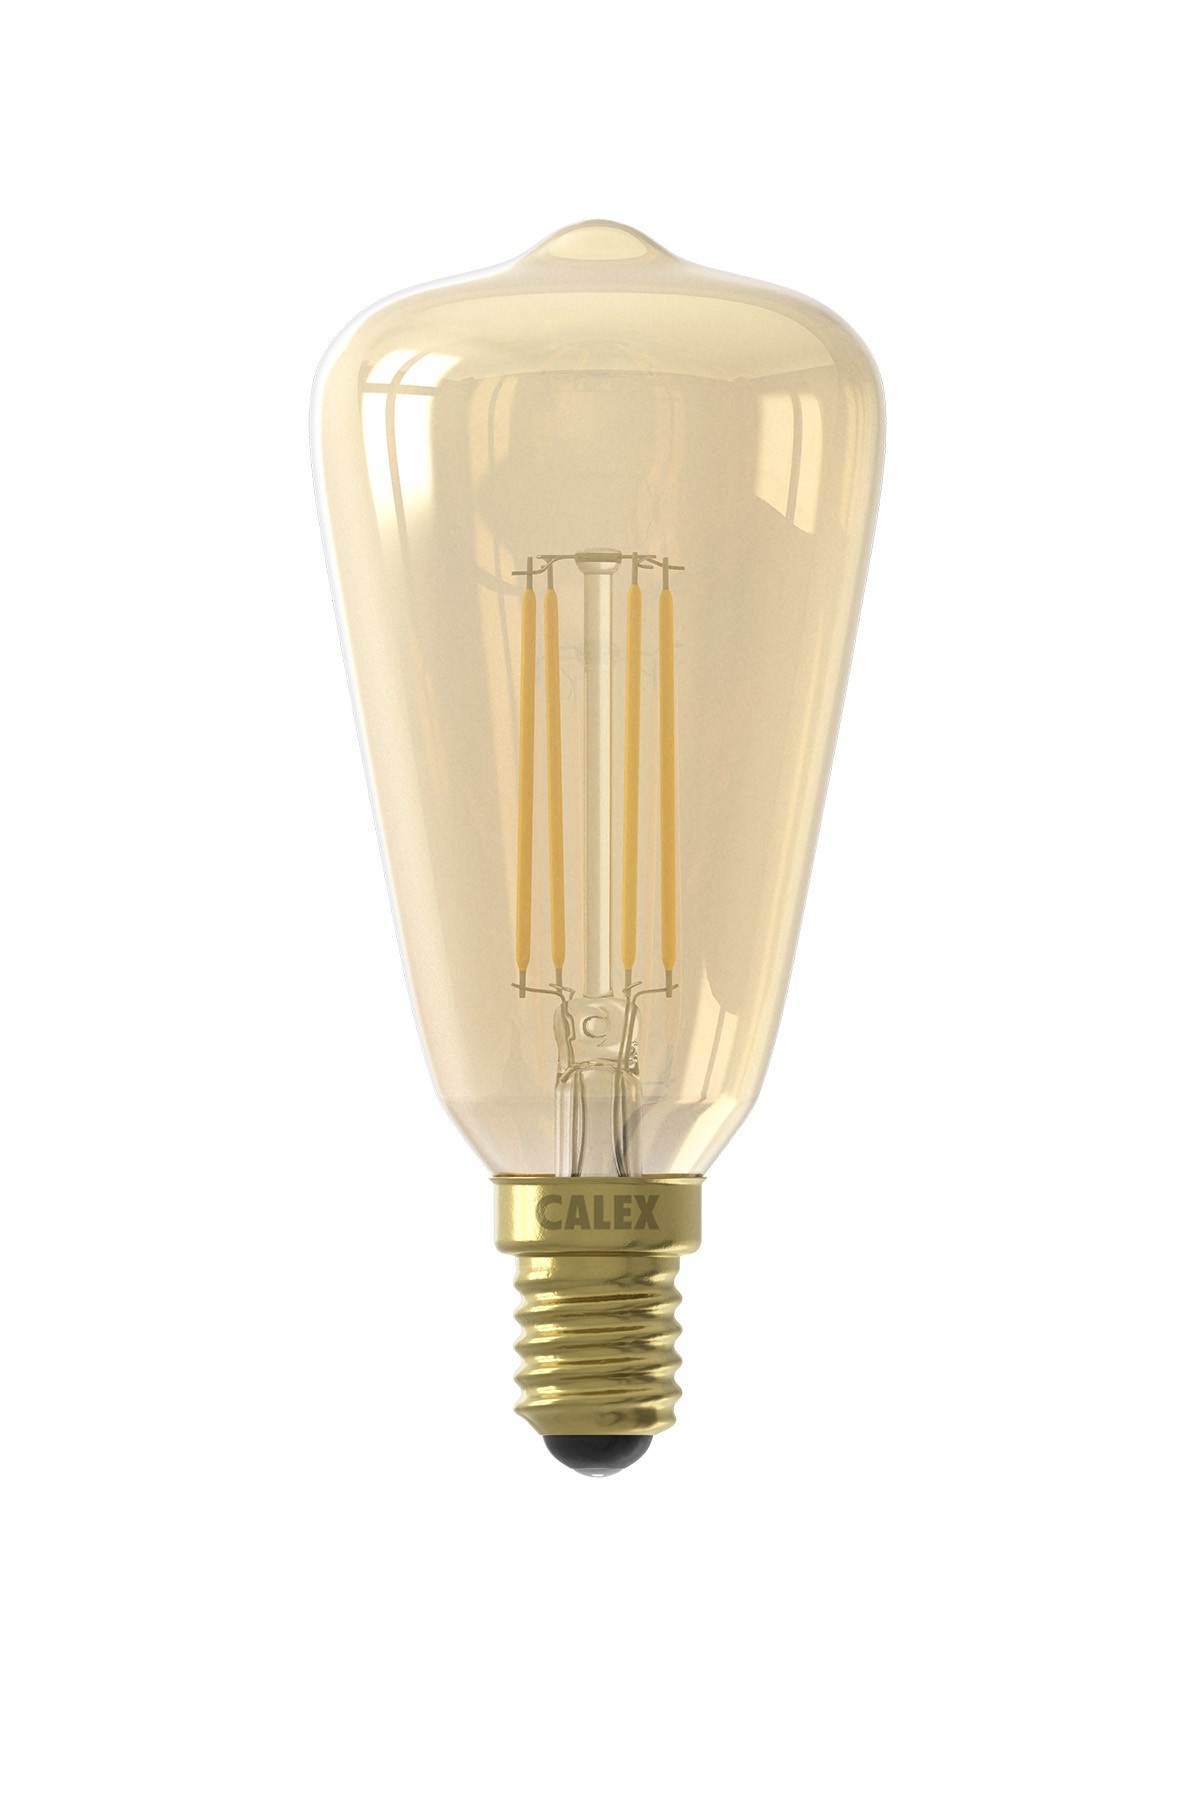 boter Verwaarlozing Krijgsgevangene Calex LED lamp goud - Rustiek - 3,5W - E14 - Dimbaar - Kynda Light